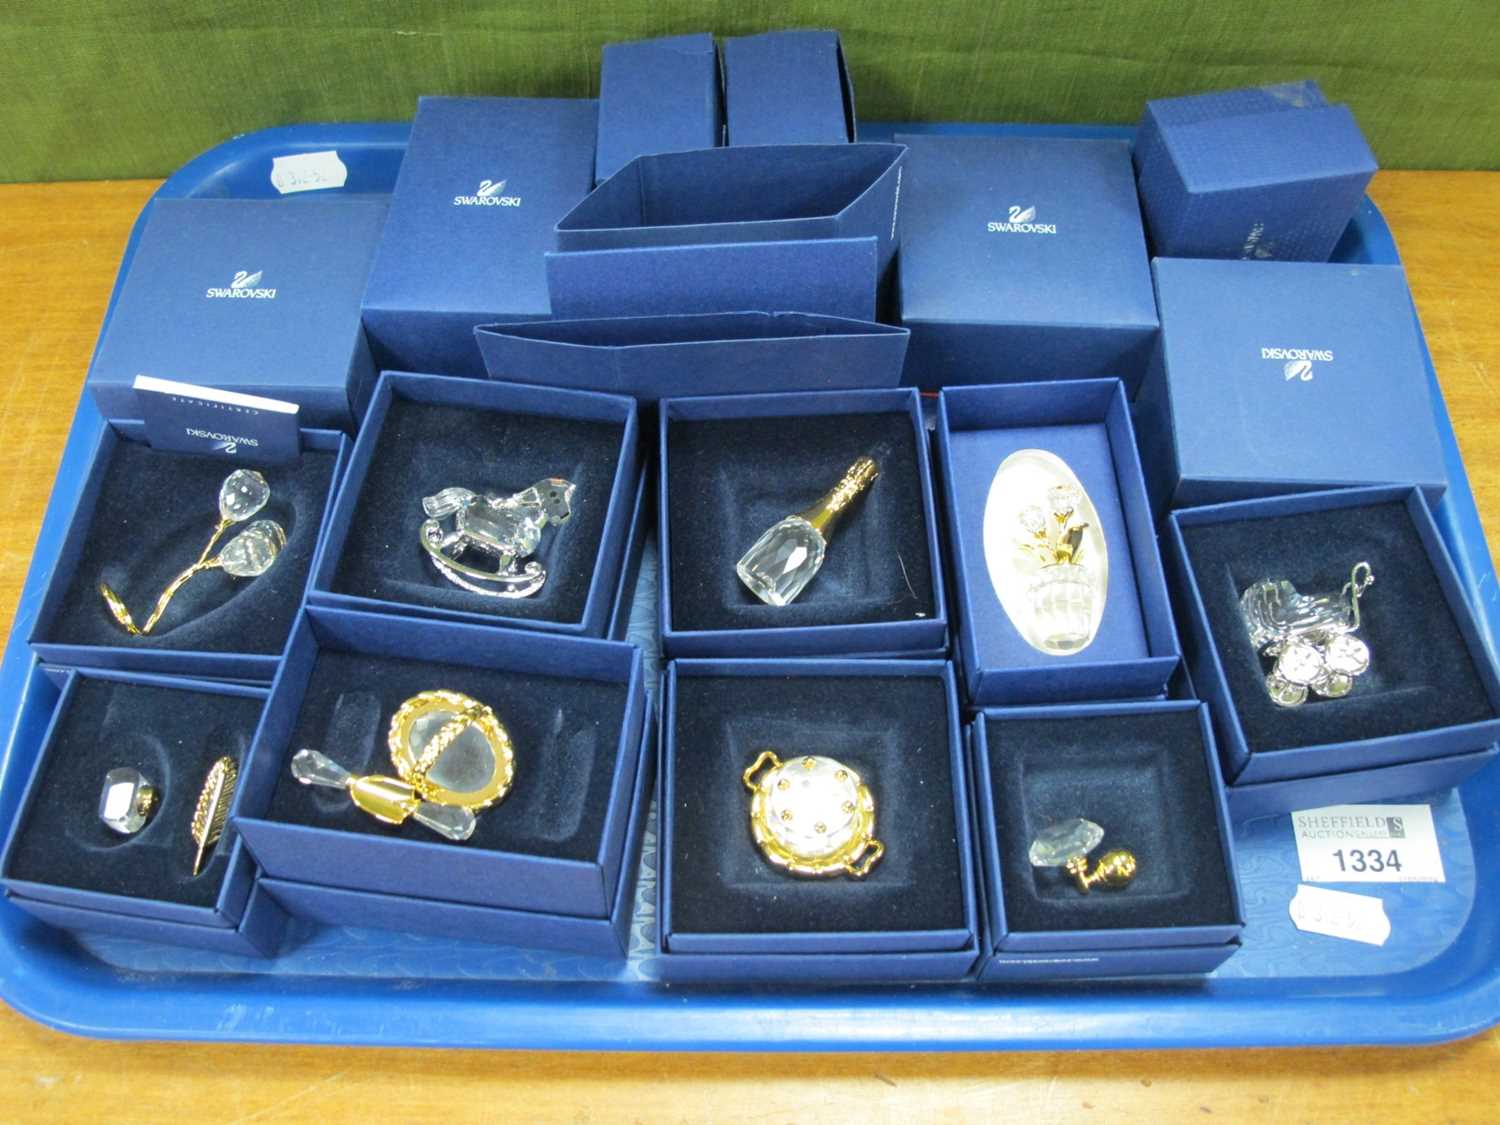 Nine Swarovski Crystal Miniatures, including pram, champagne bottle, plant pot, cake, garden tug,